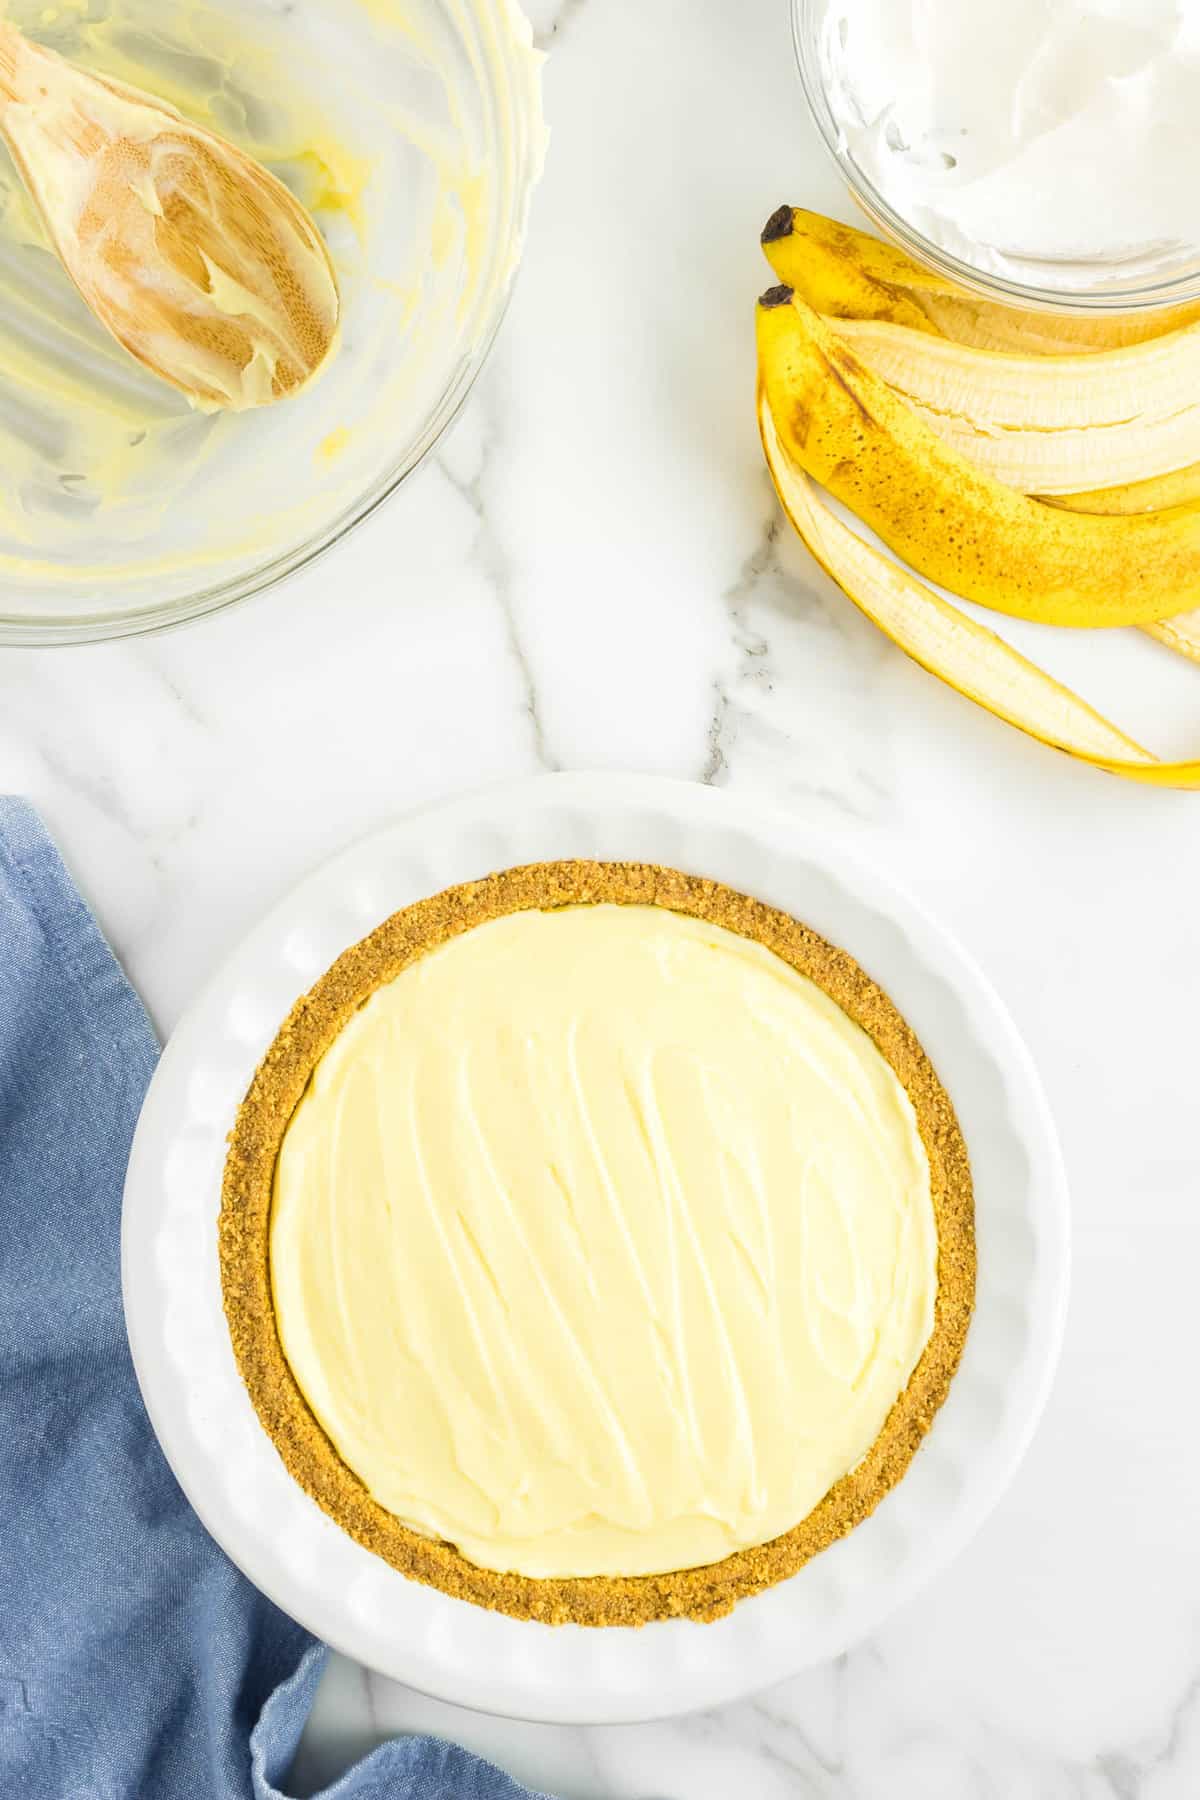 Spreading Filling in Banana-Lined Pie Crust for No Bake Banana Cream PIe Recipe